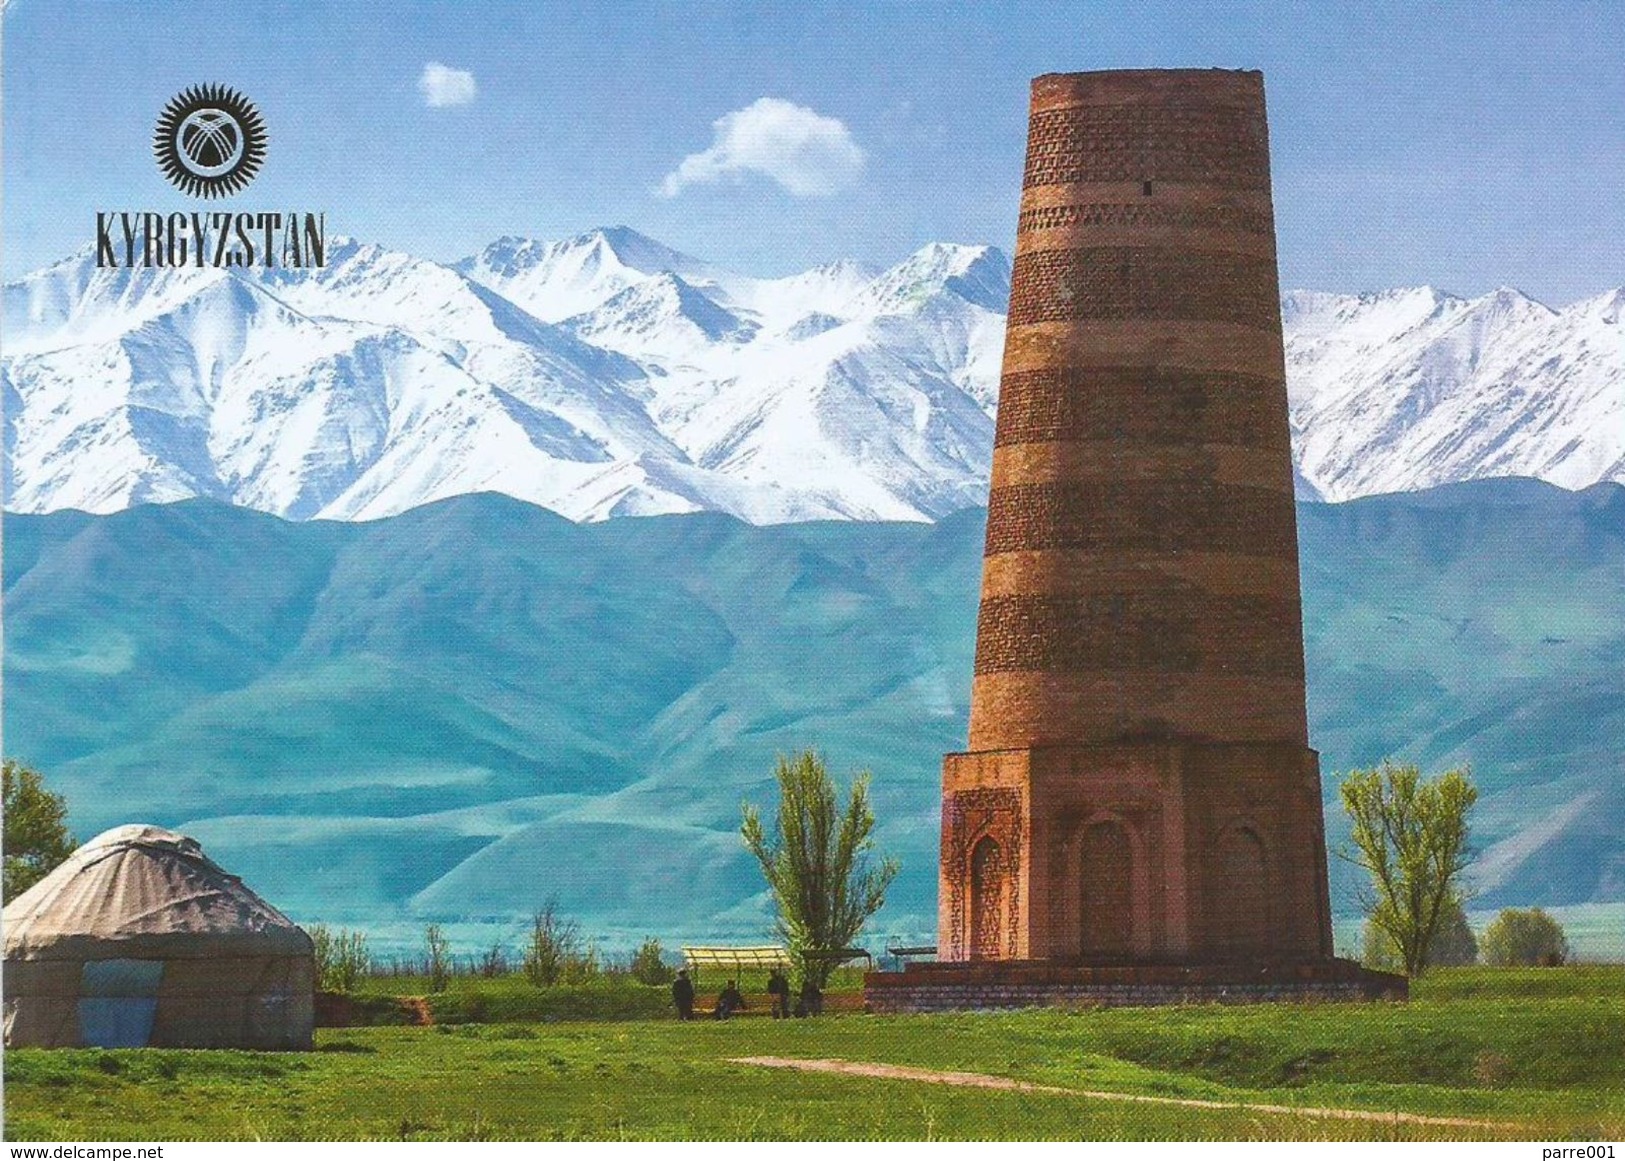 Kyrgyzstan 2017 Bishkek Map Cartography 11th Century Burana Tower Mountains Code 02 Postal Stationary Card - Kirghizstan